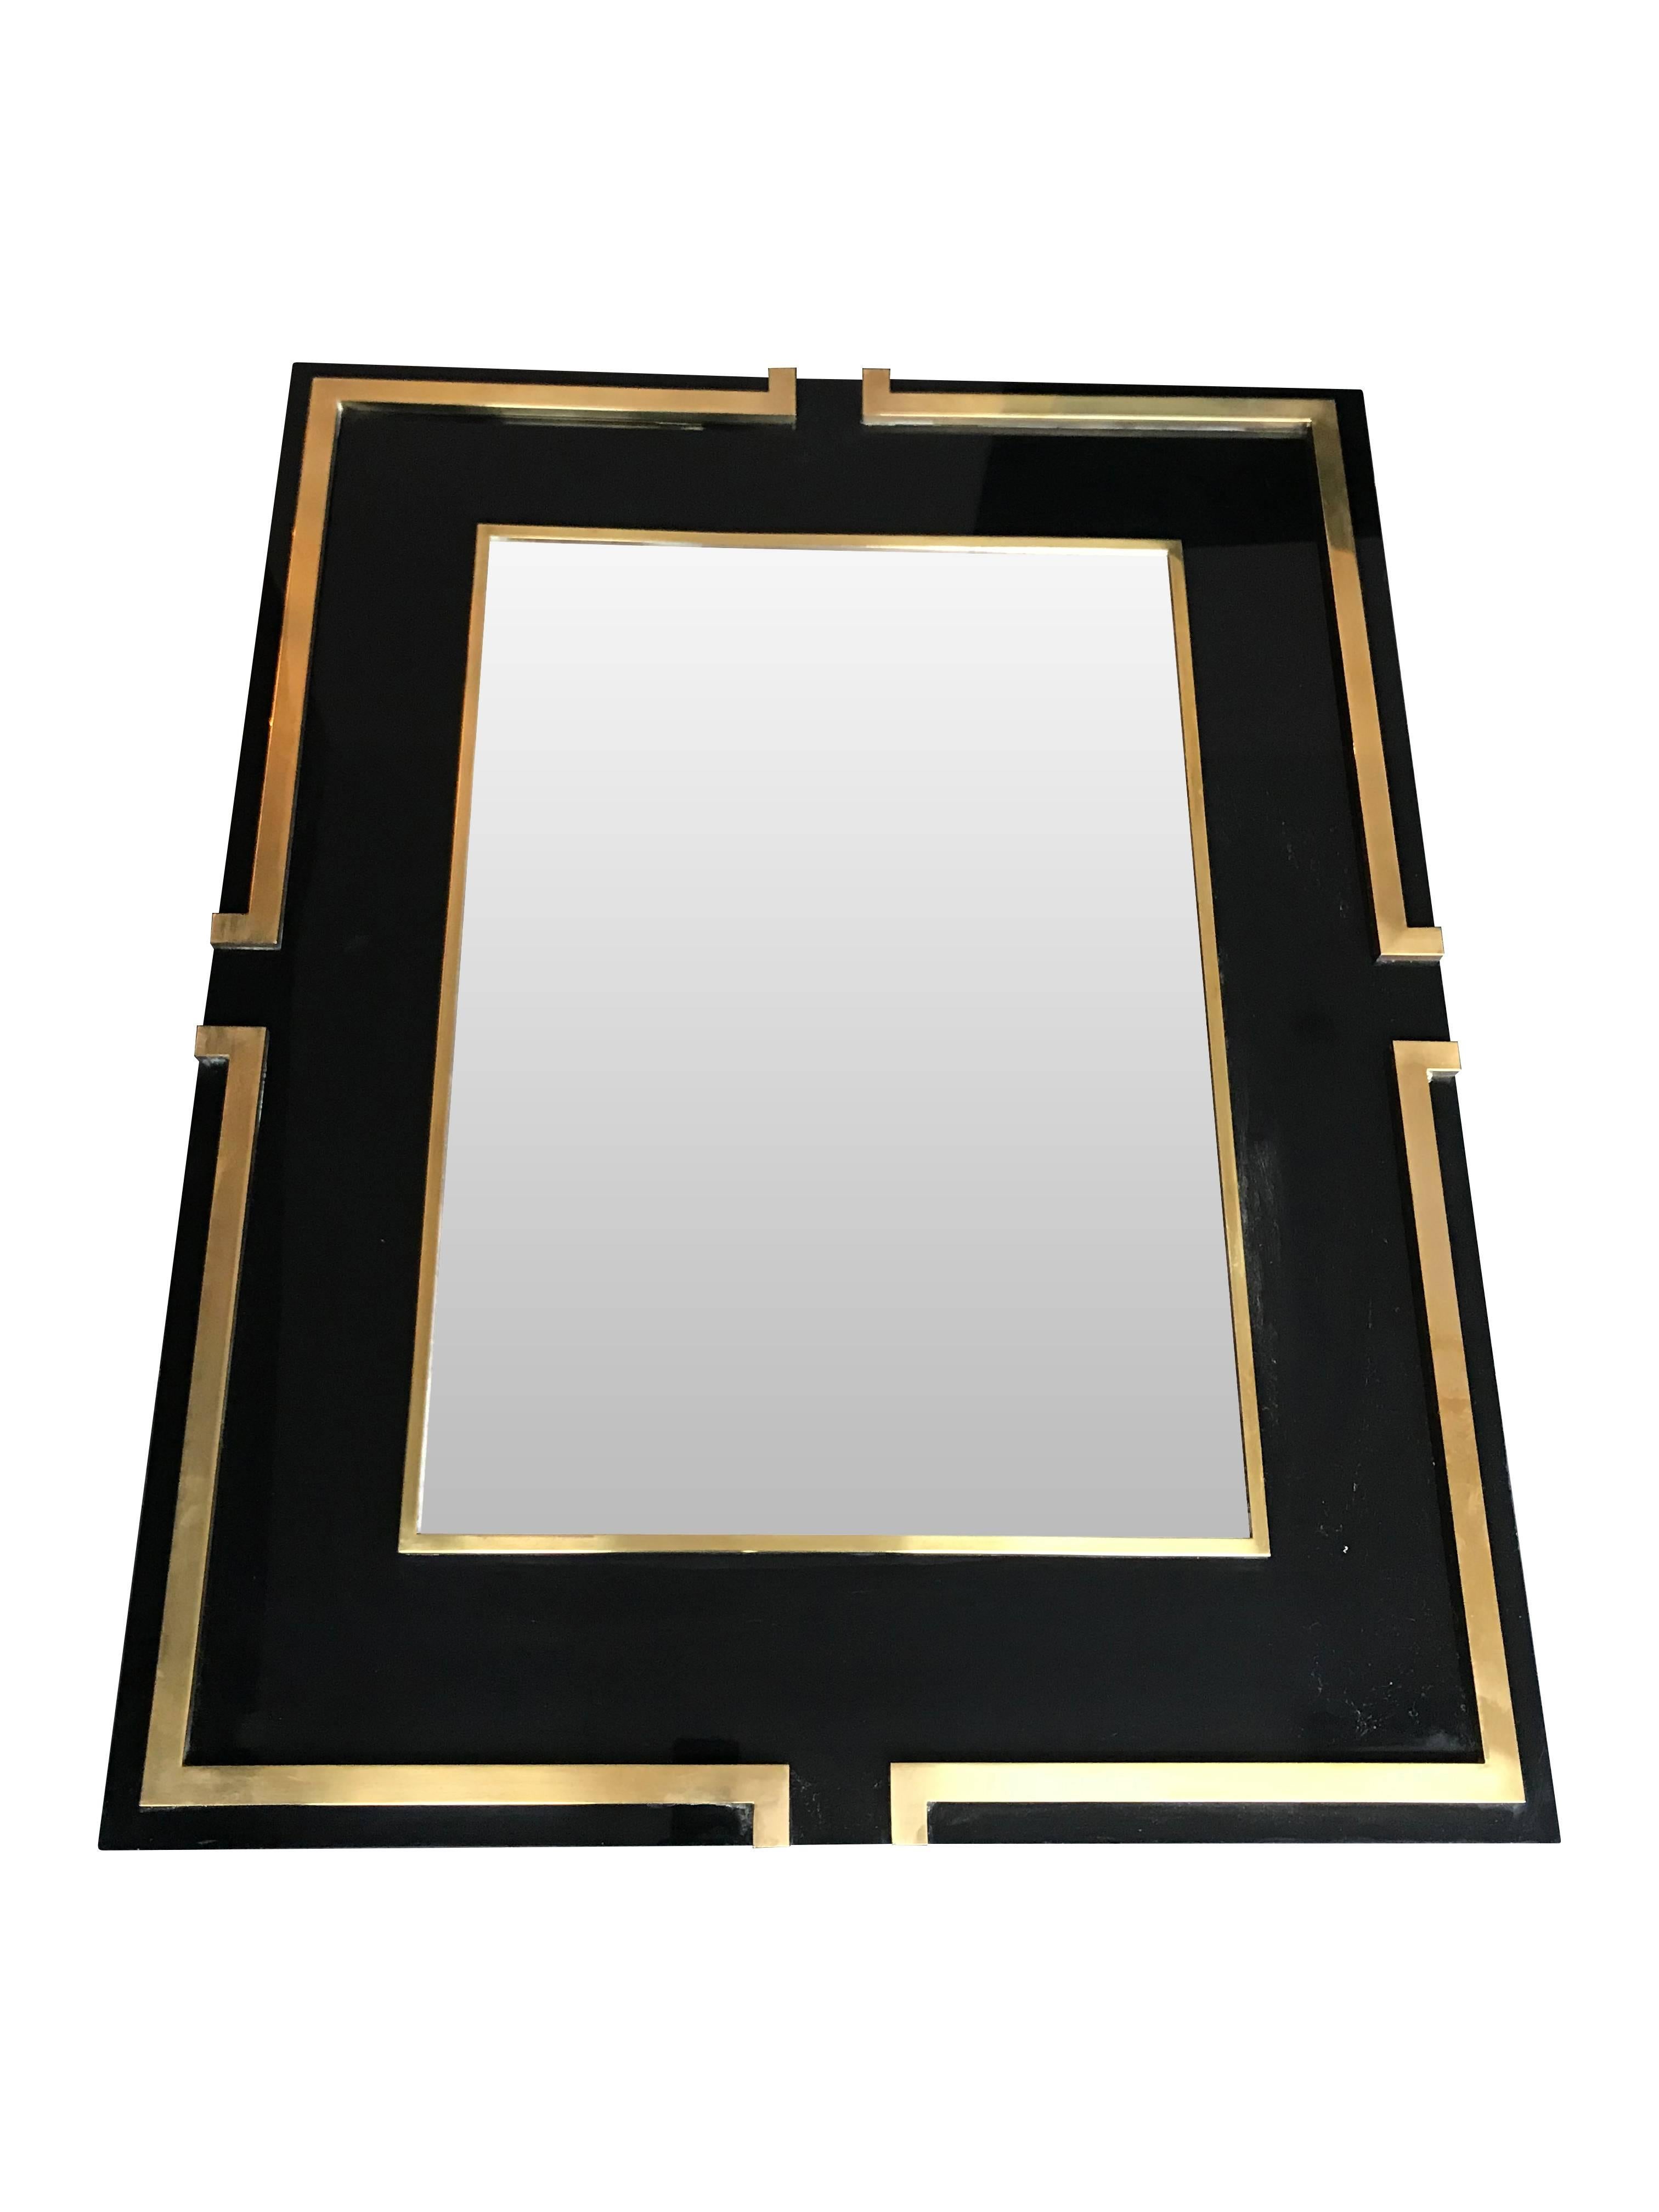 A Maison Jansen style black Lucite mirror with raised brass detail surround and internal frame.

 